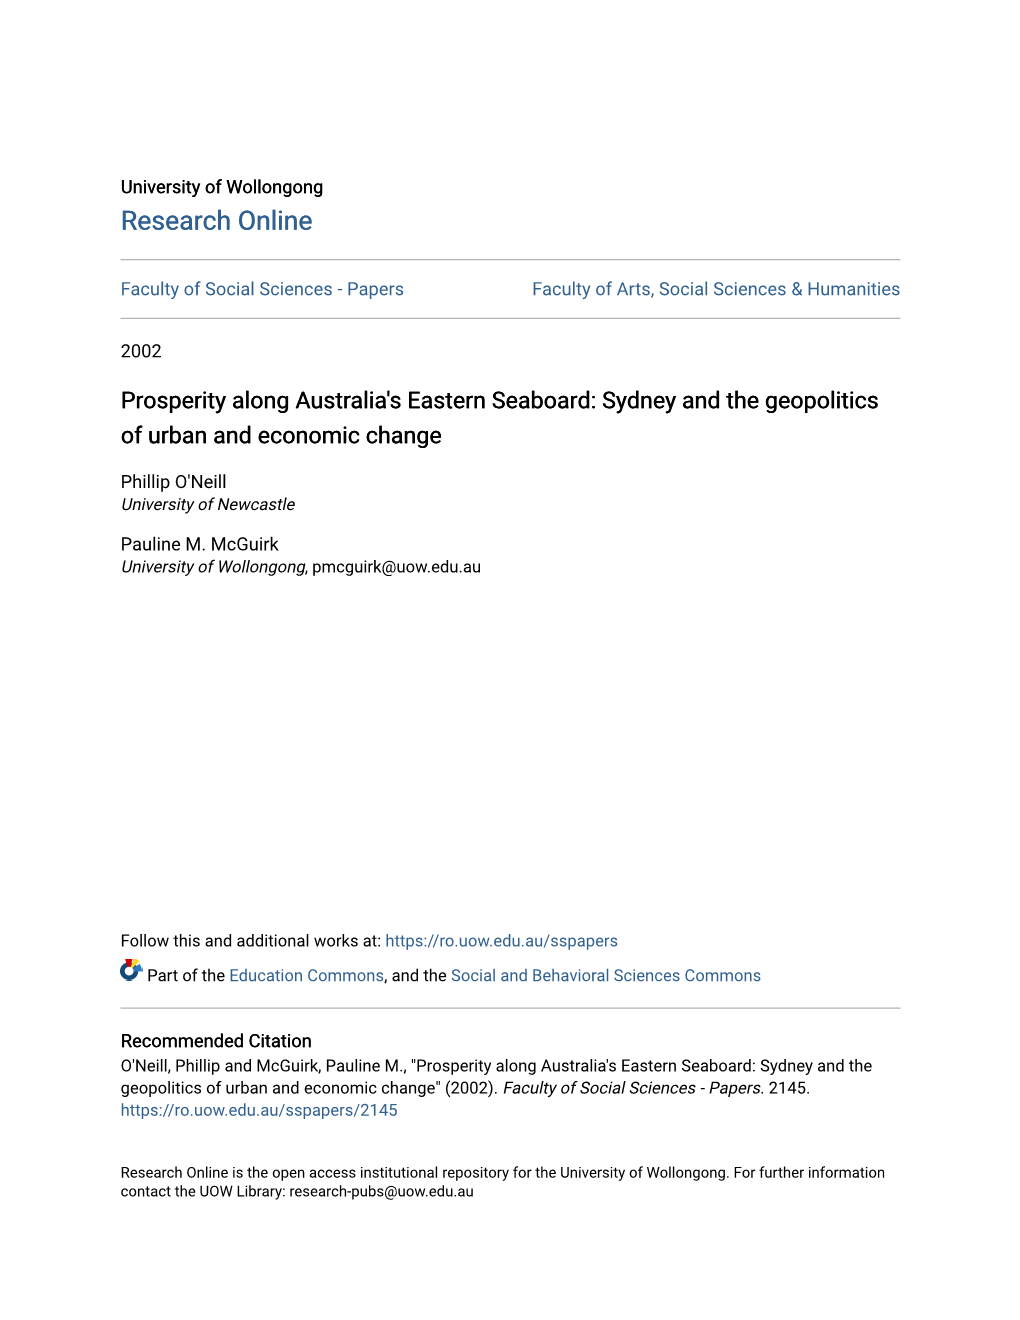 Prosperity Along Australia's Eastern Seaboard: Sydney and the Geopolitics of Urban and Economic Change